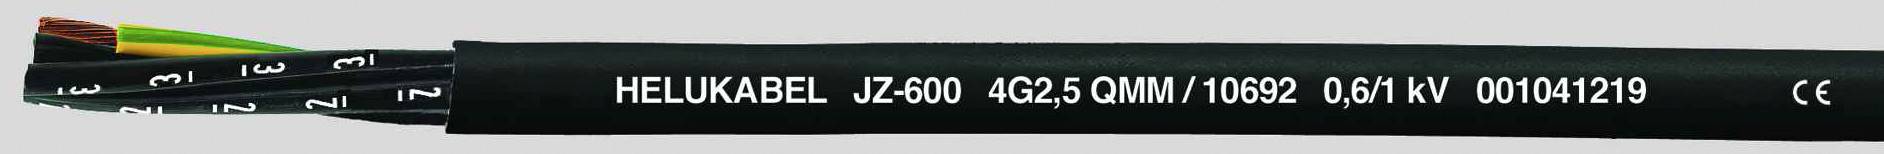 HELUKABEL JZ-600 Steuerleitung 7 G 0.50 mm² Schwarz 10558-1000 1000 m